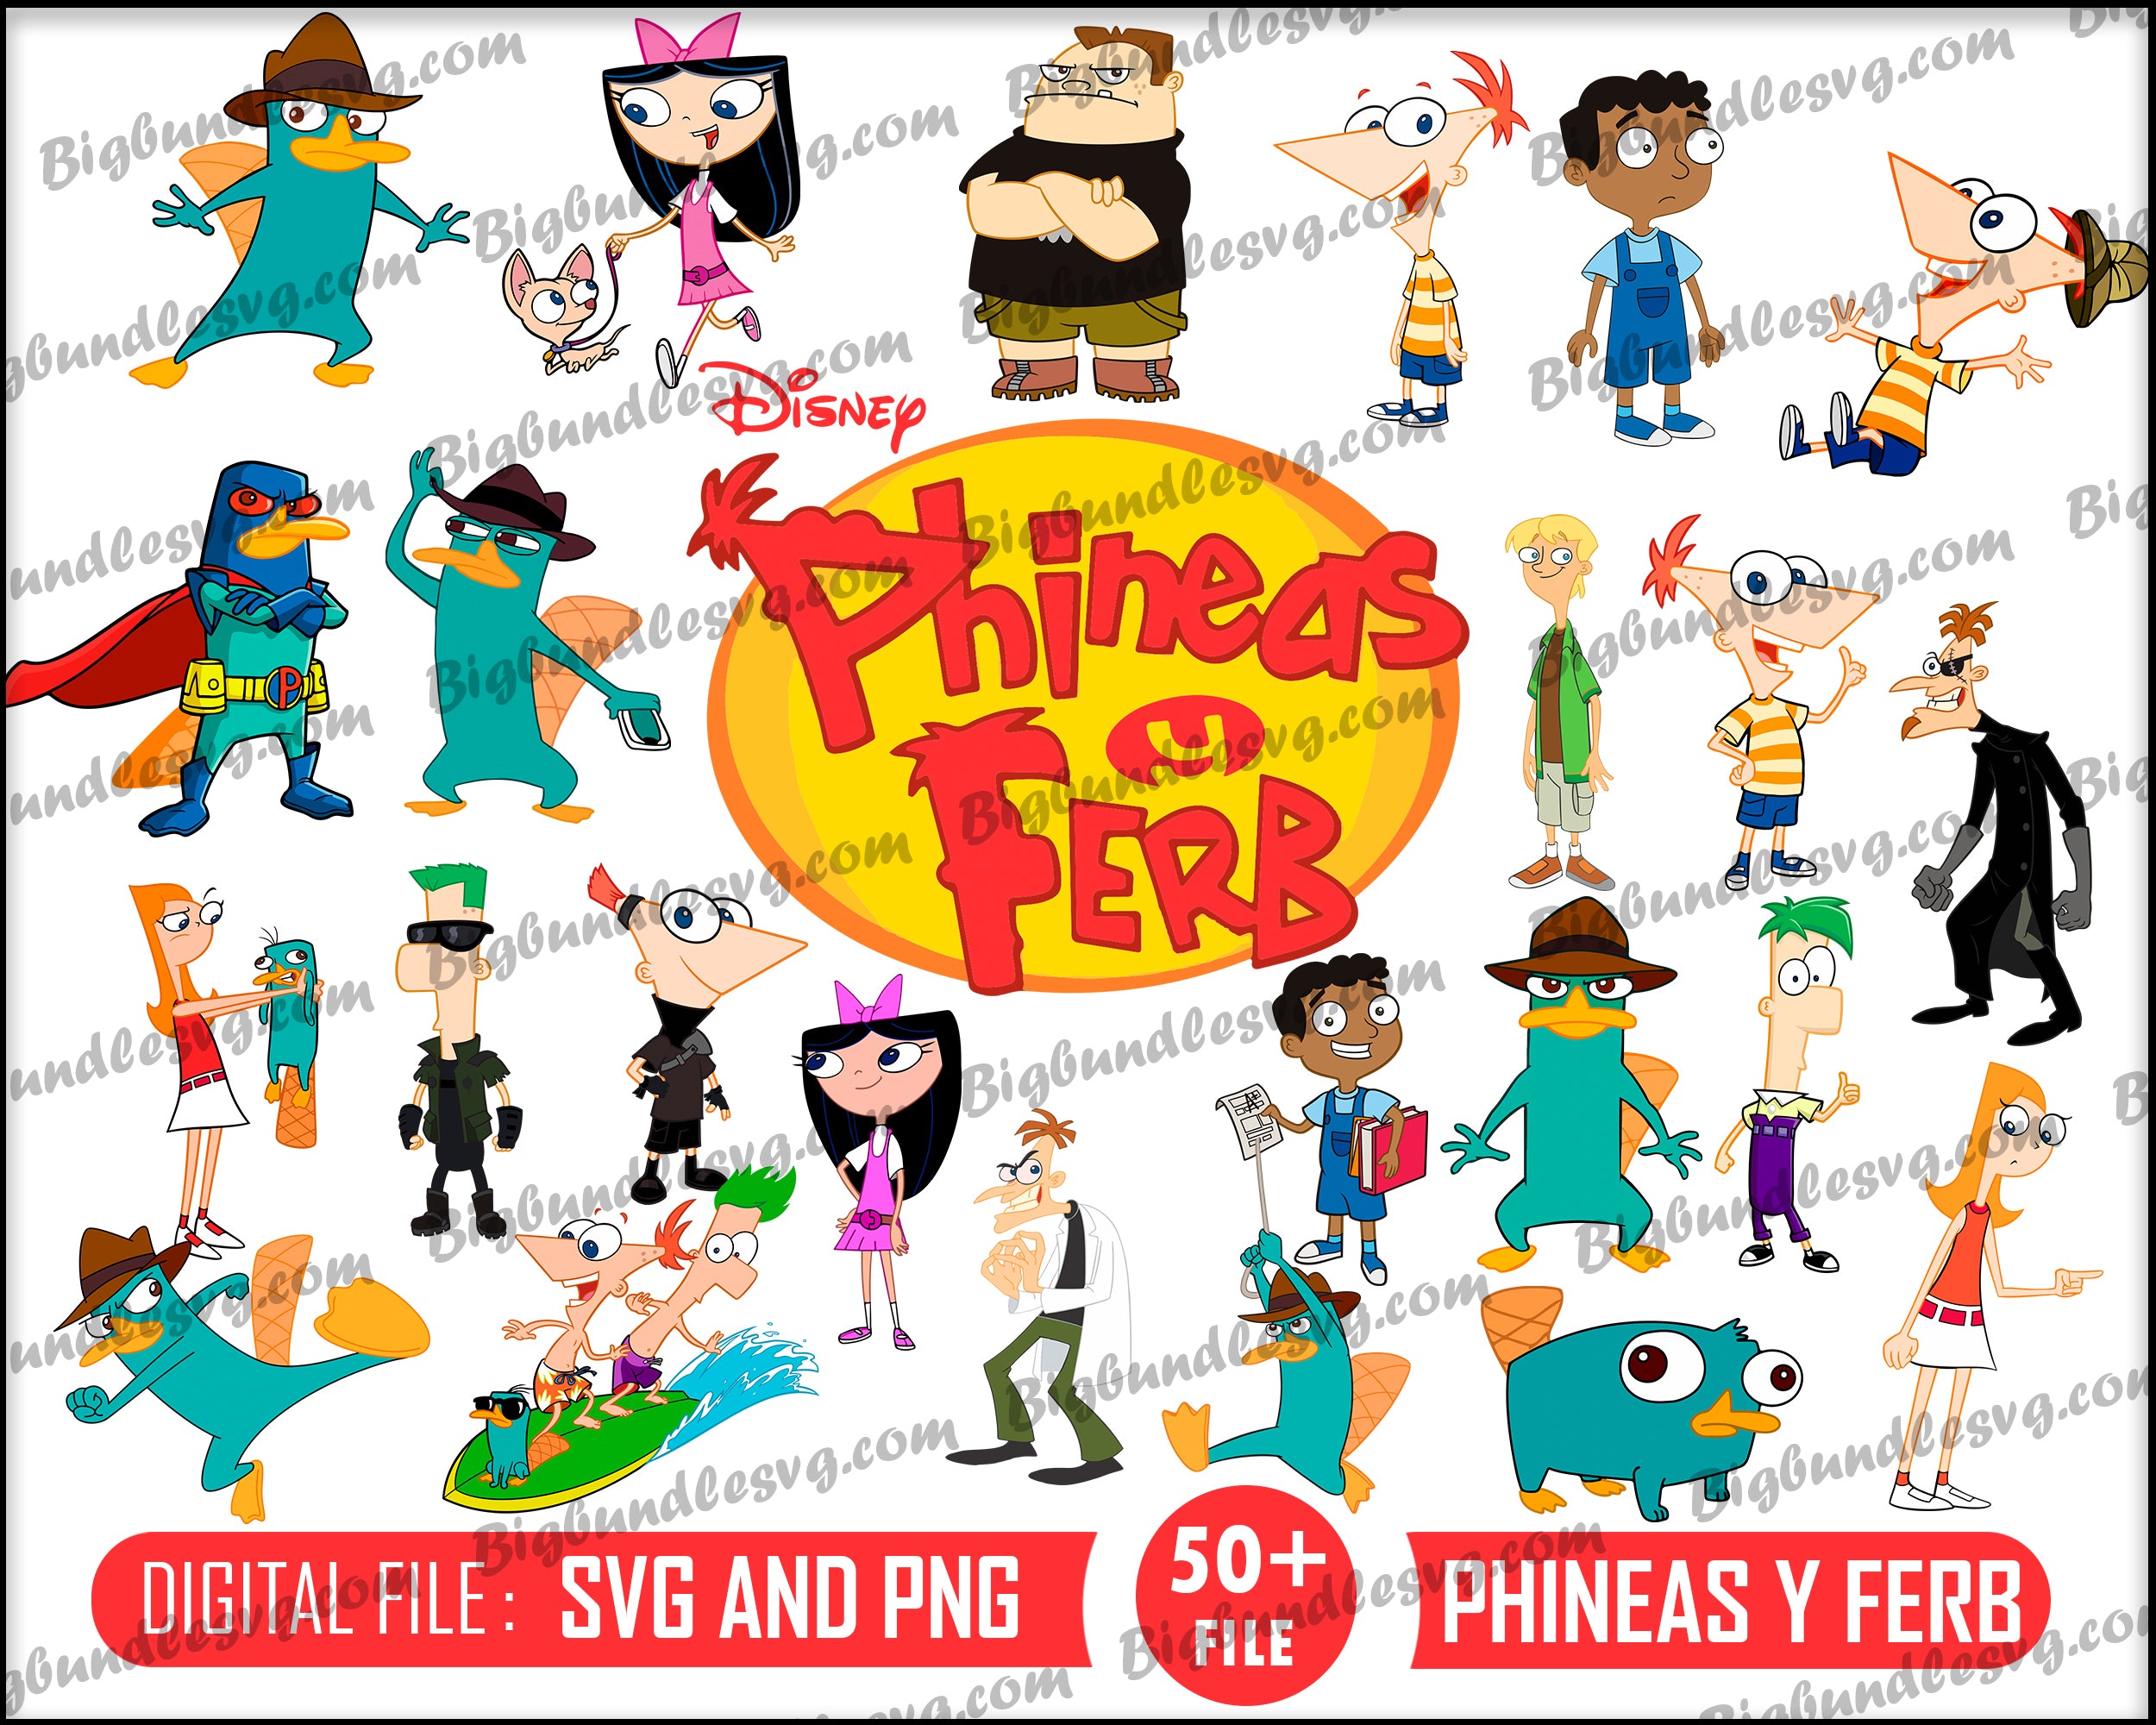 Phineas y Ferb svg bundle - Digital download